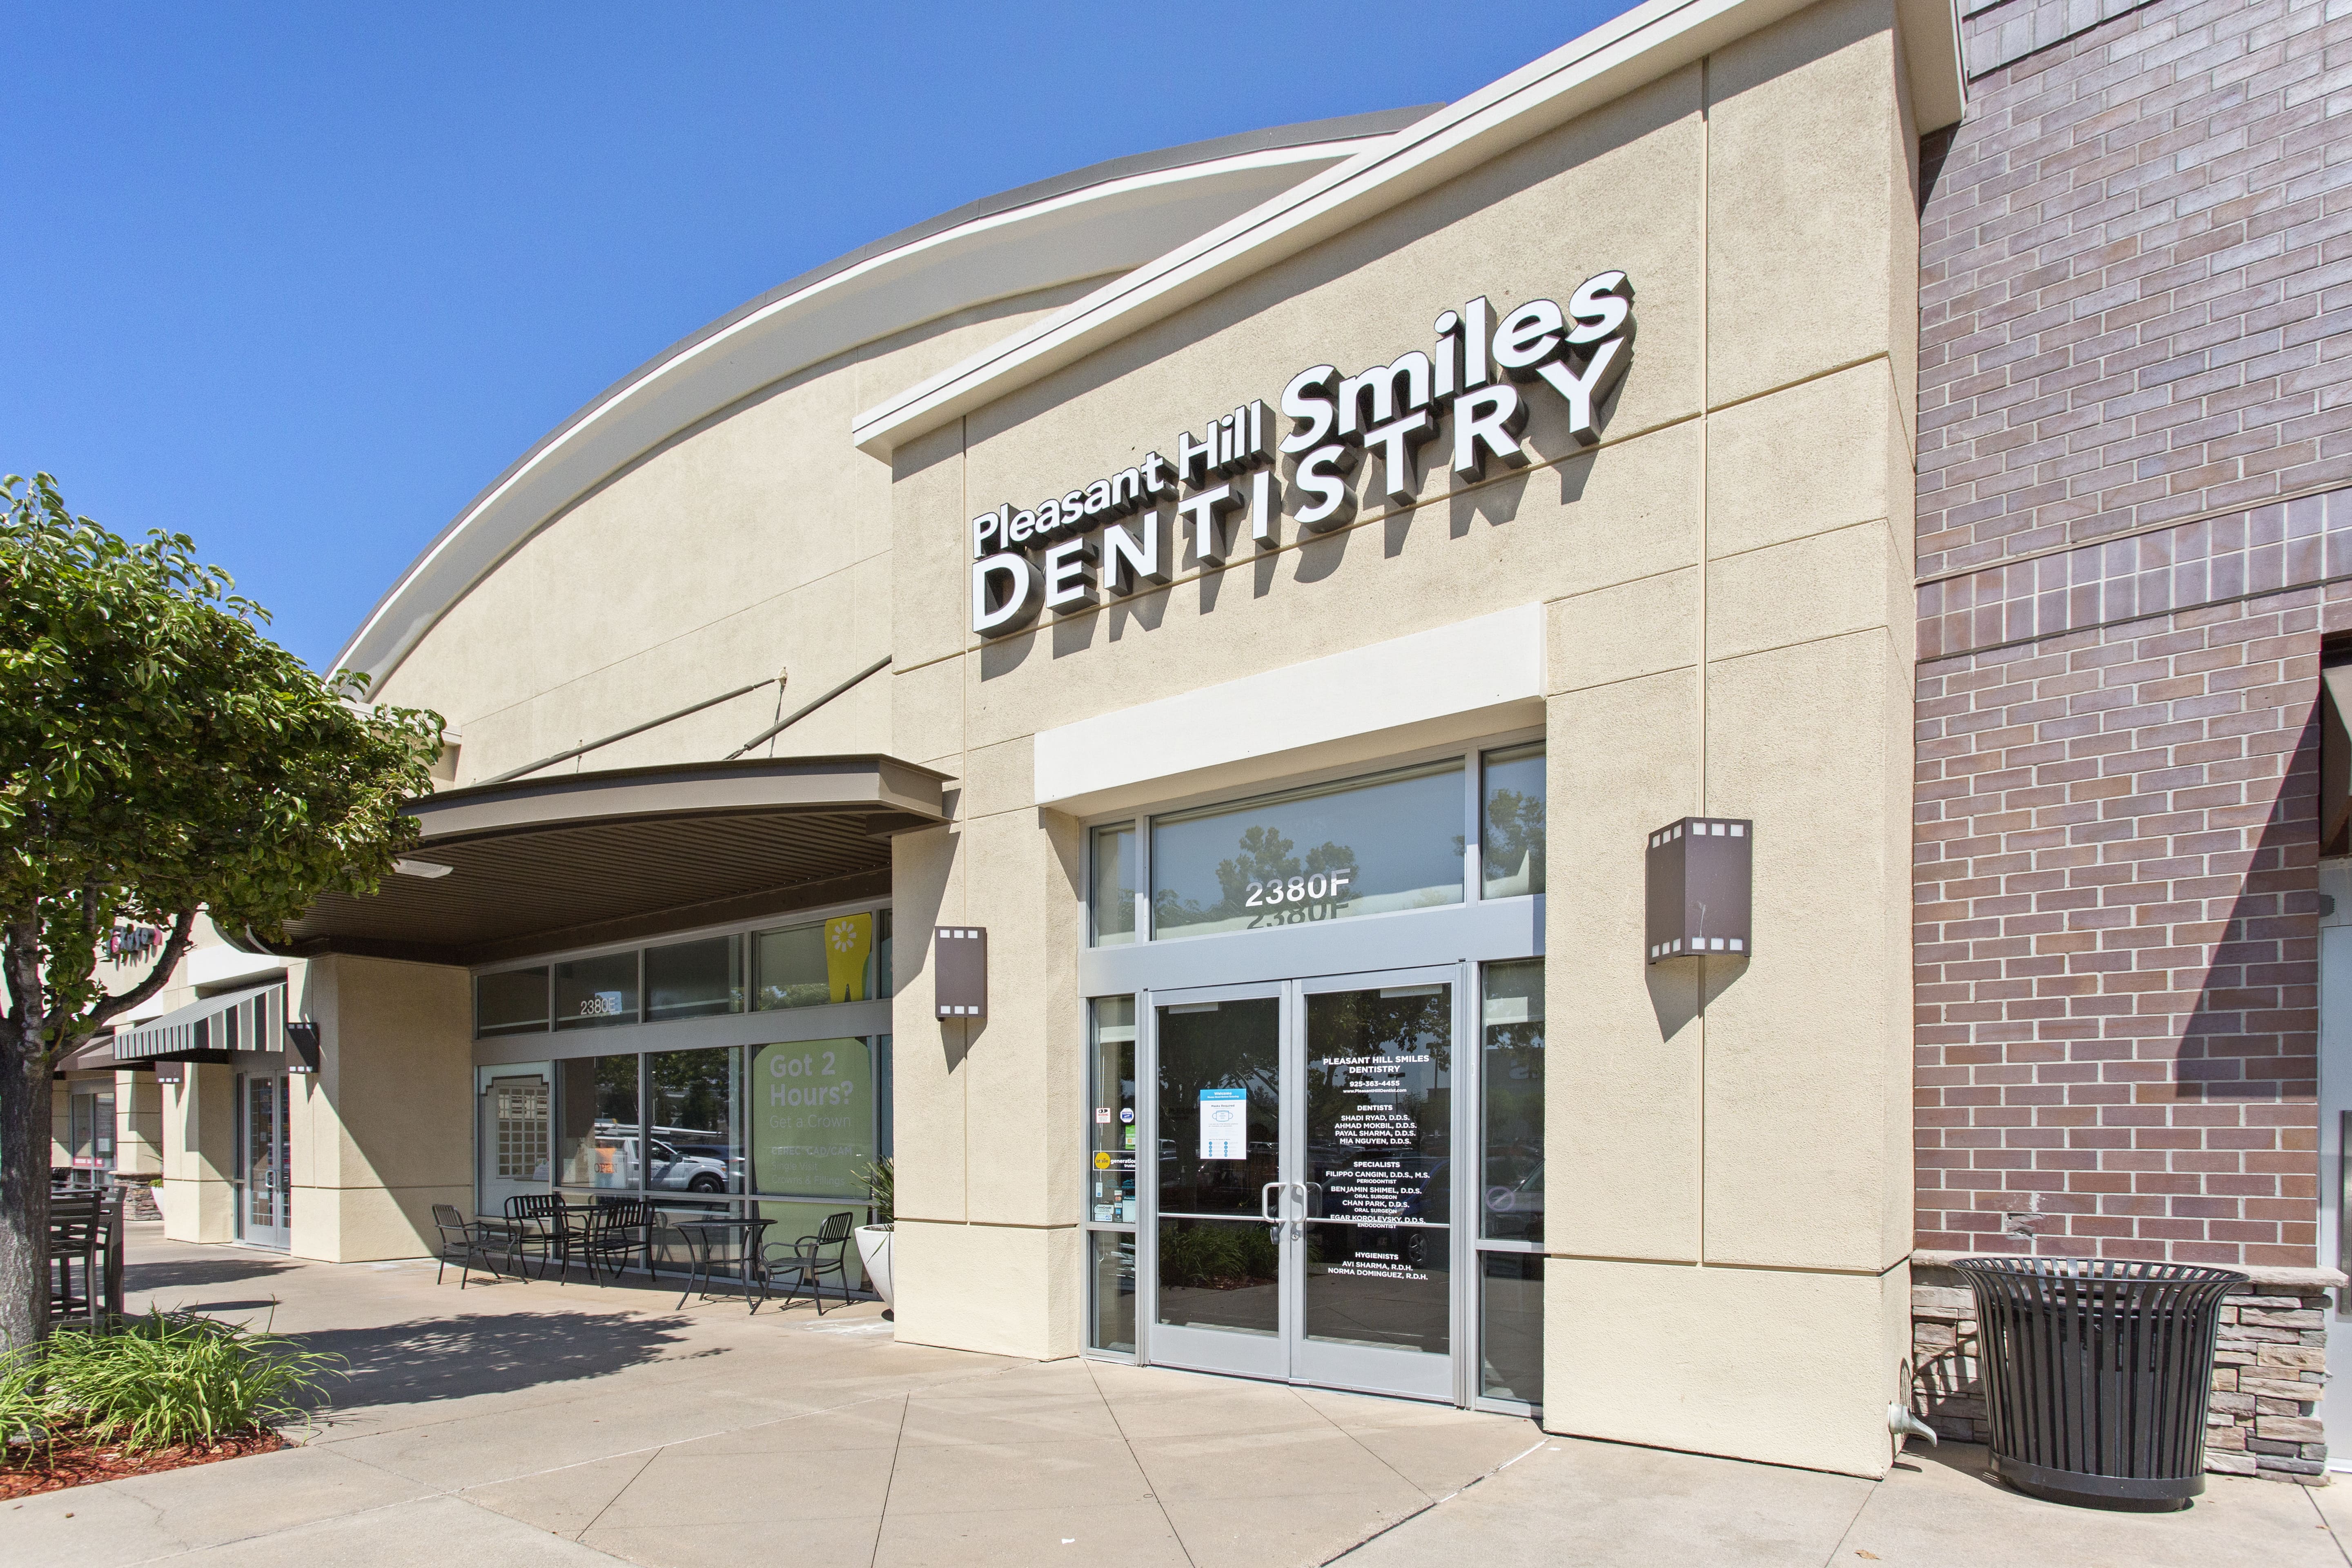 Dentists in Pleasant Hill, CA.